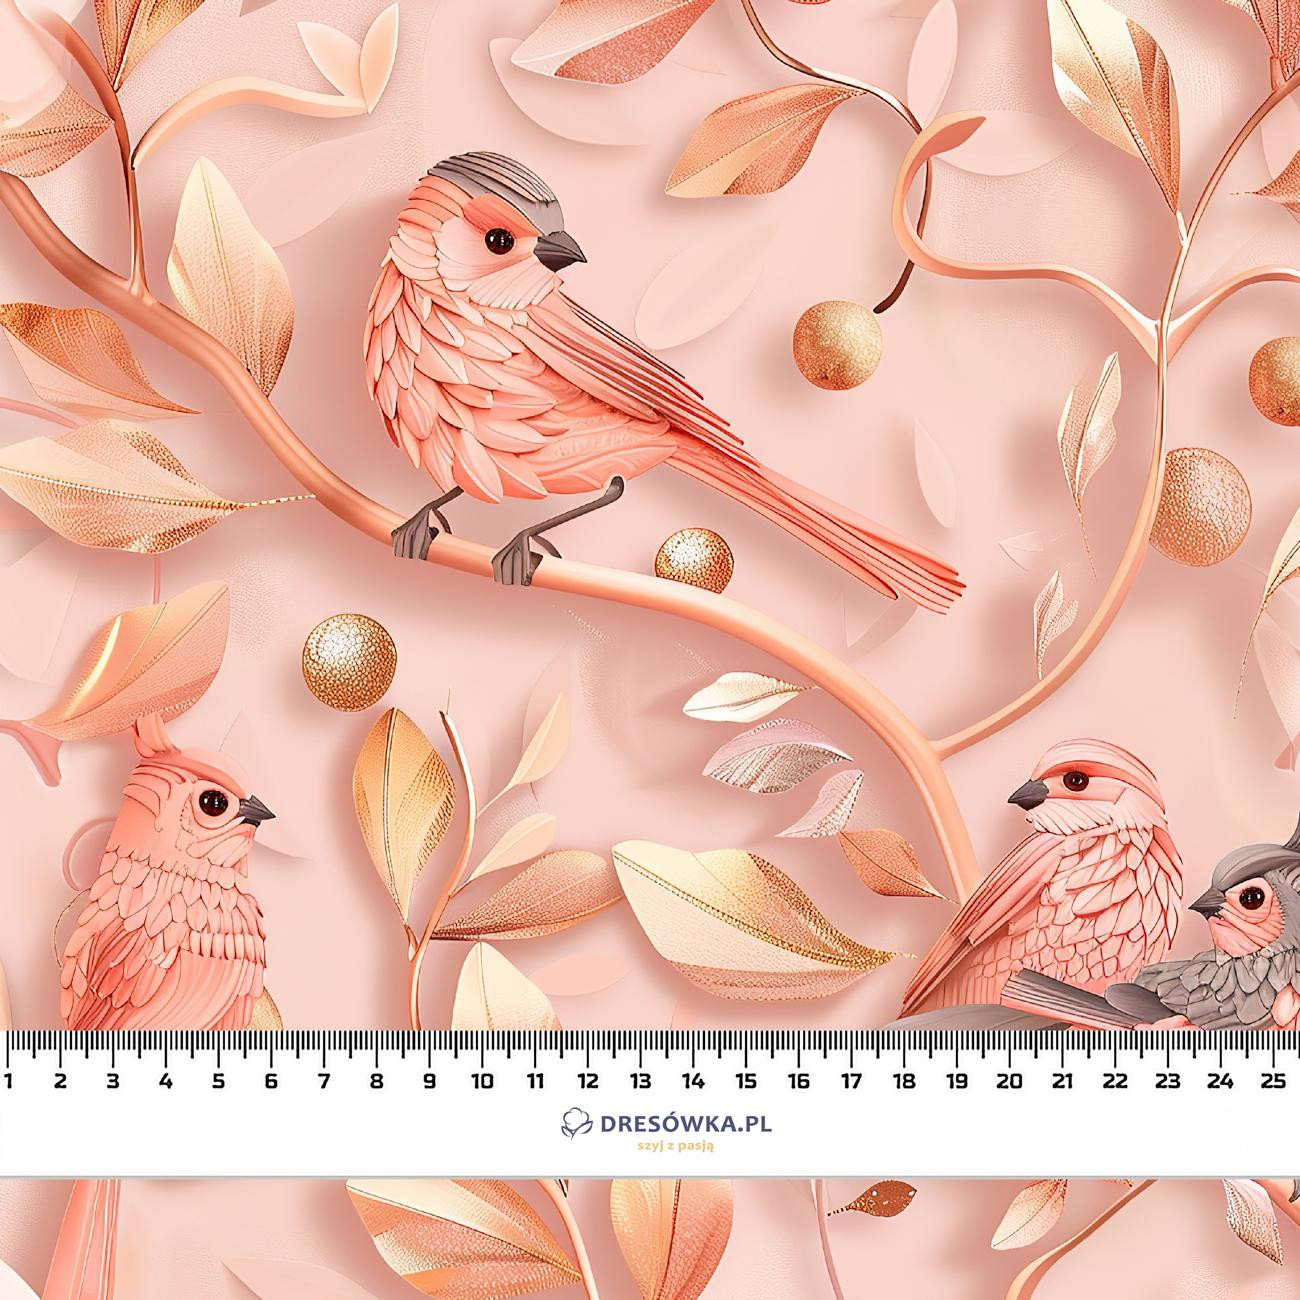 PINK BIRDS - softshell